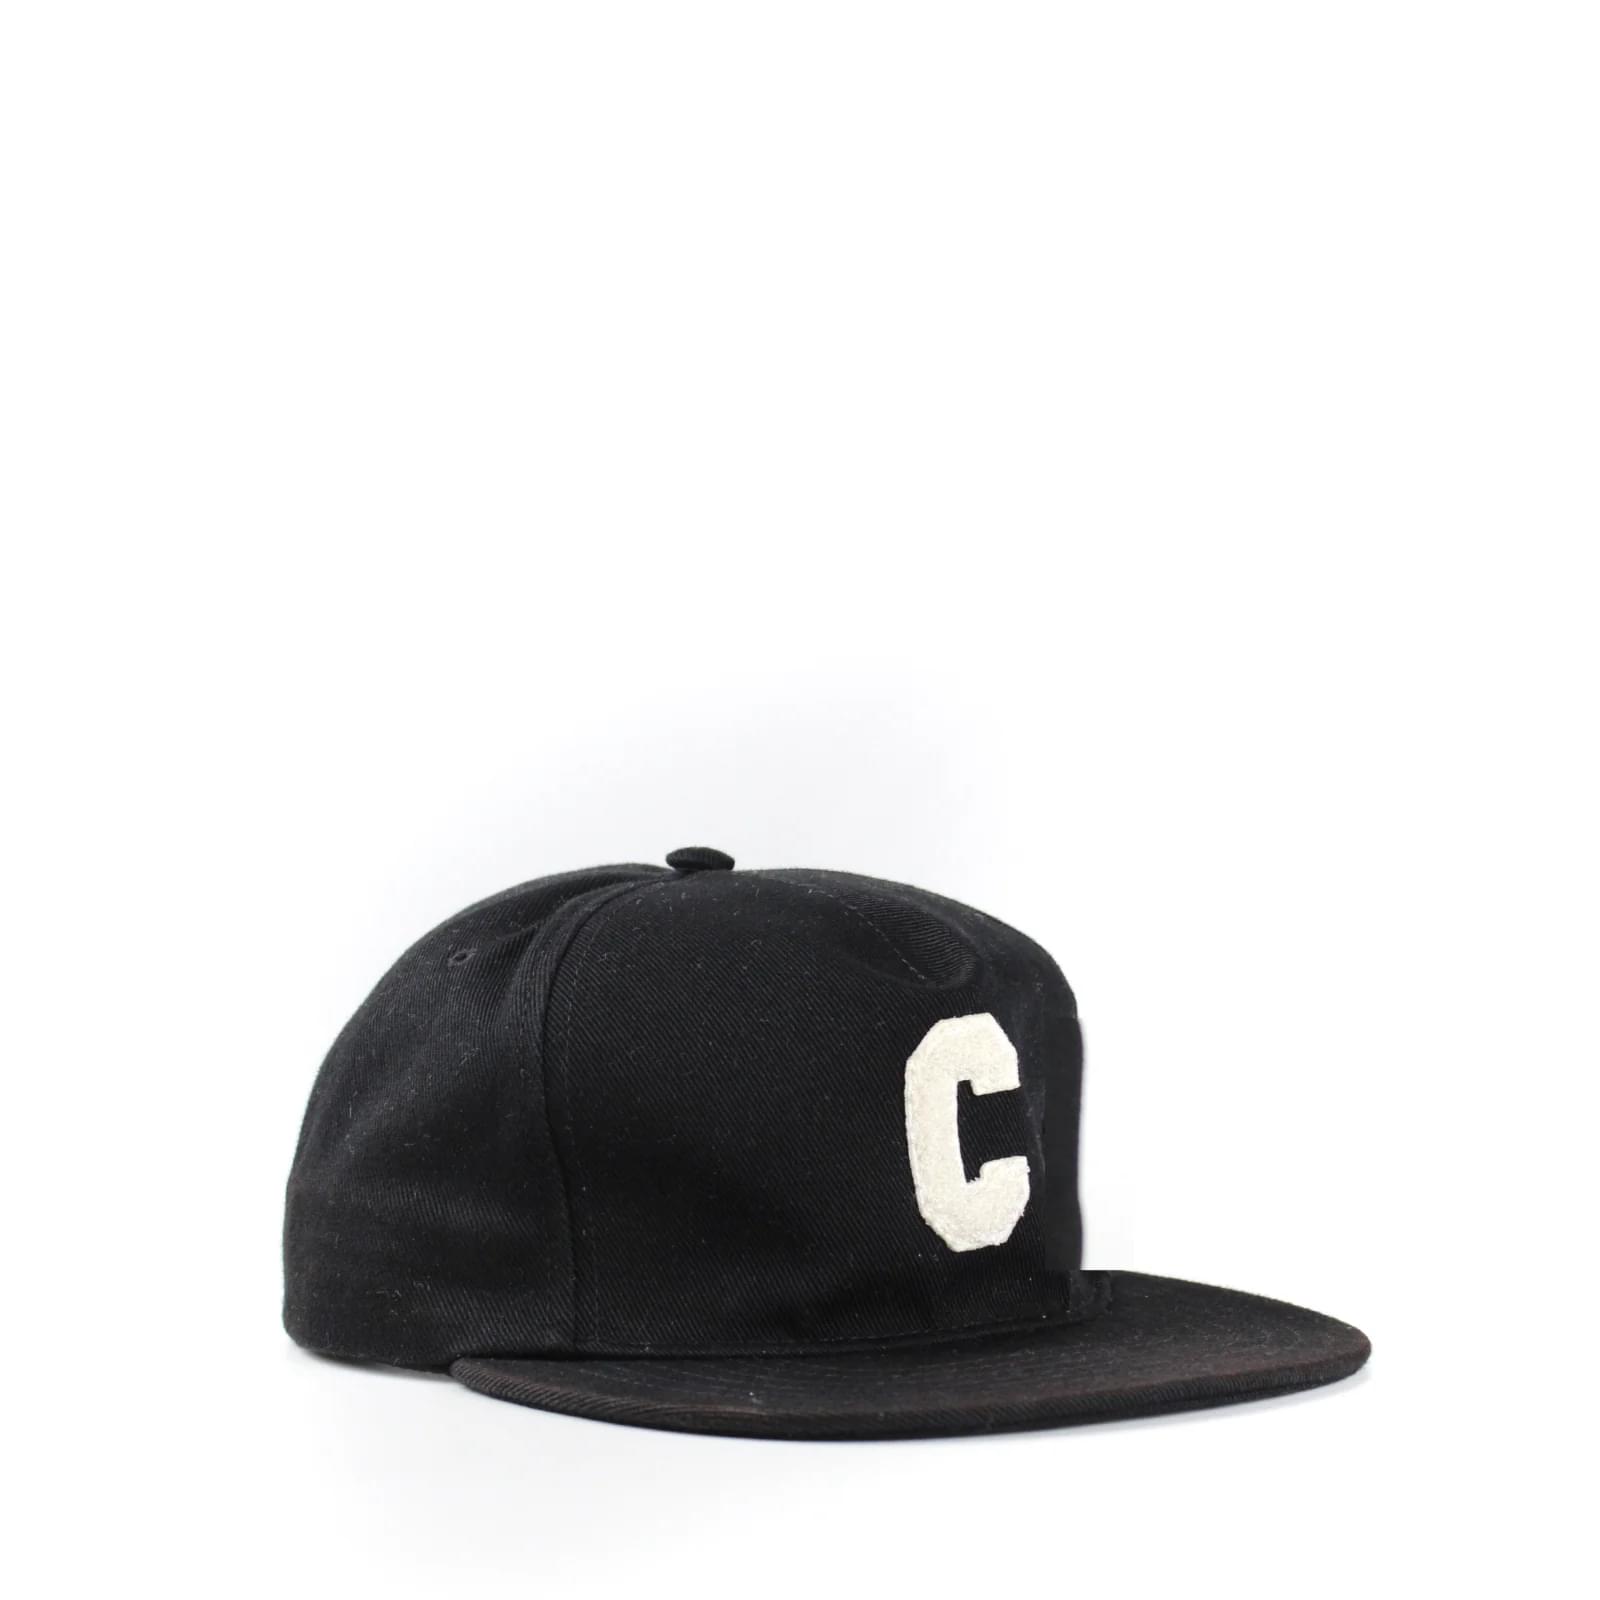 CELINE BASEBALL CAP IN COTTON - BLACK